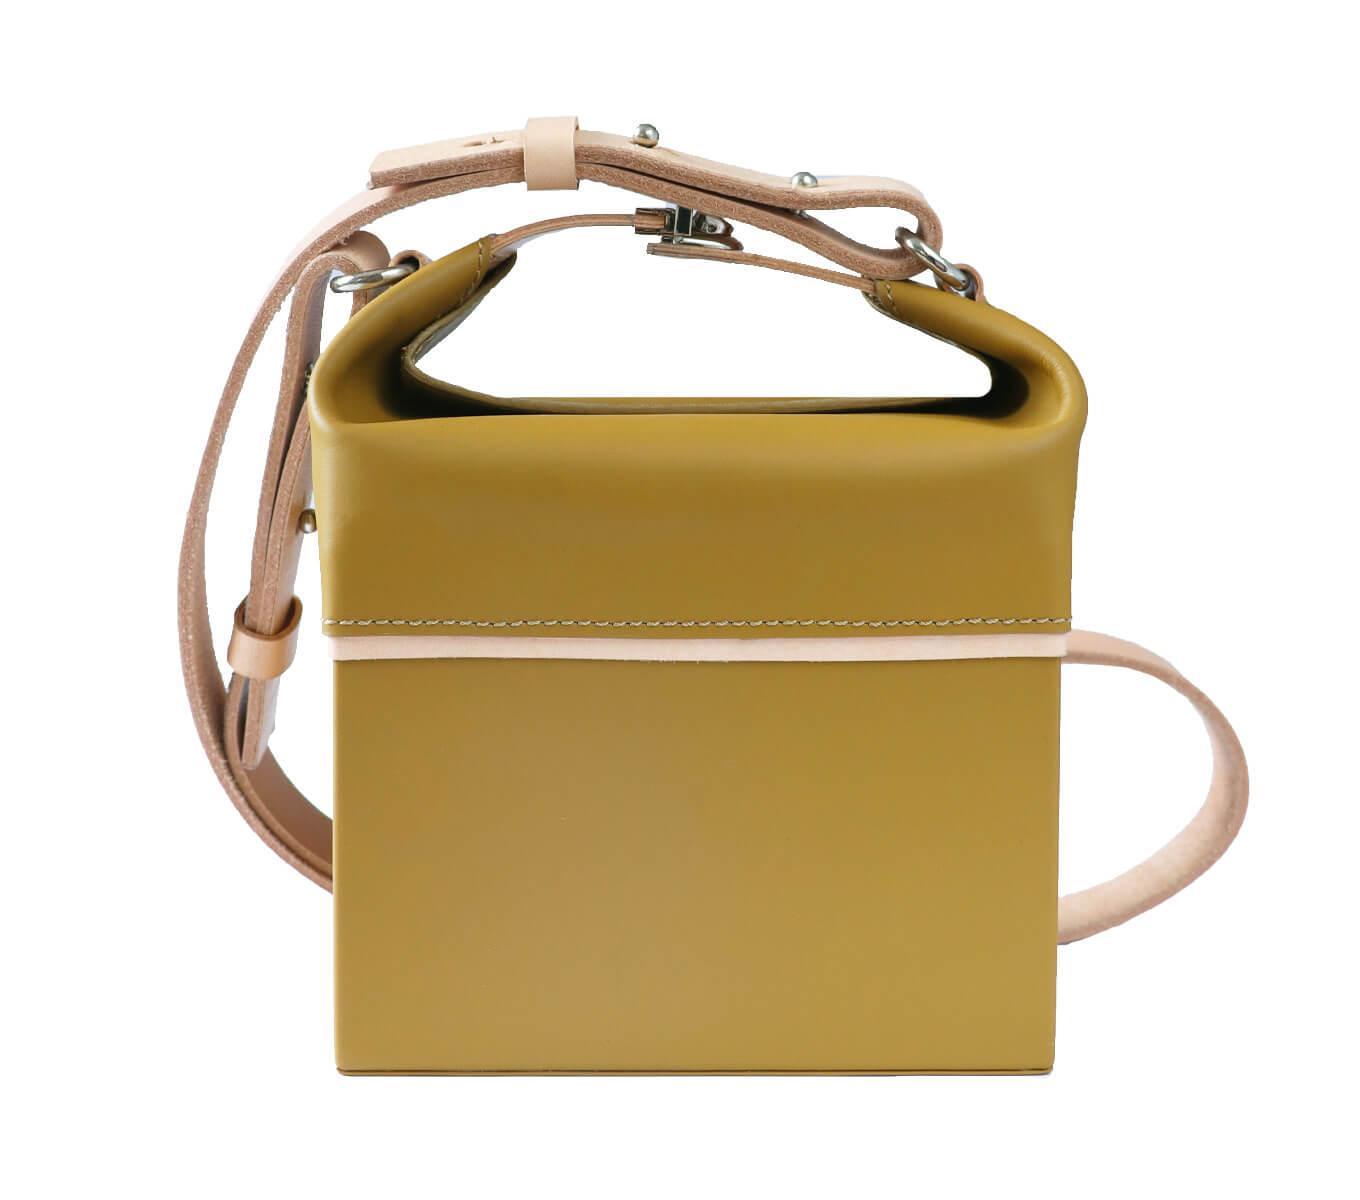 Buy the Lotus ladies' Mirabel handbag online at www.lotusshoes.co.uk